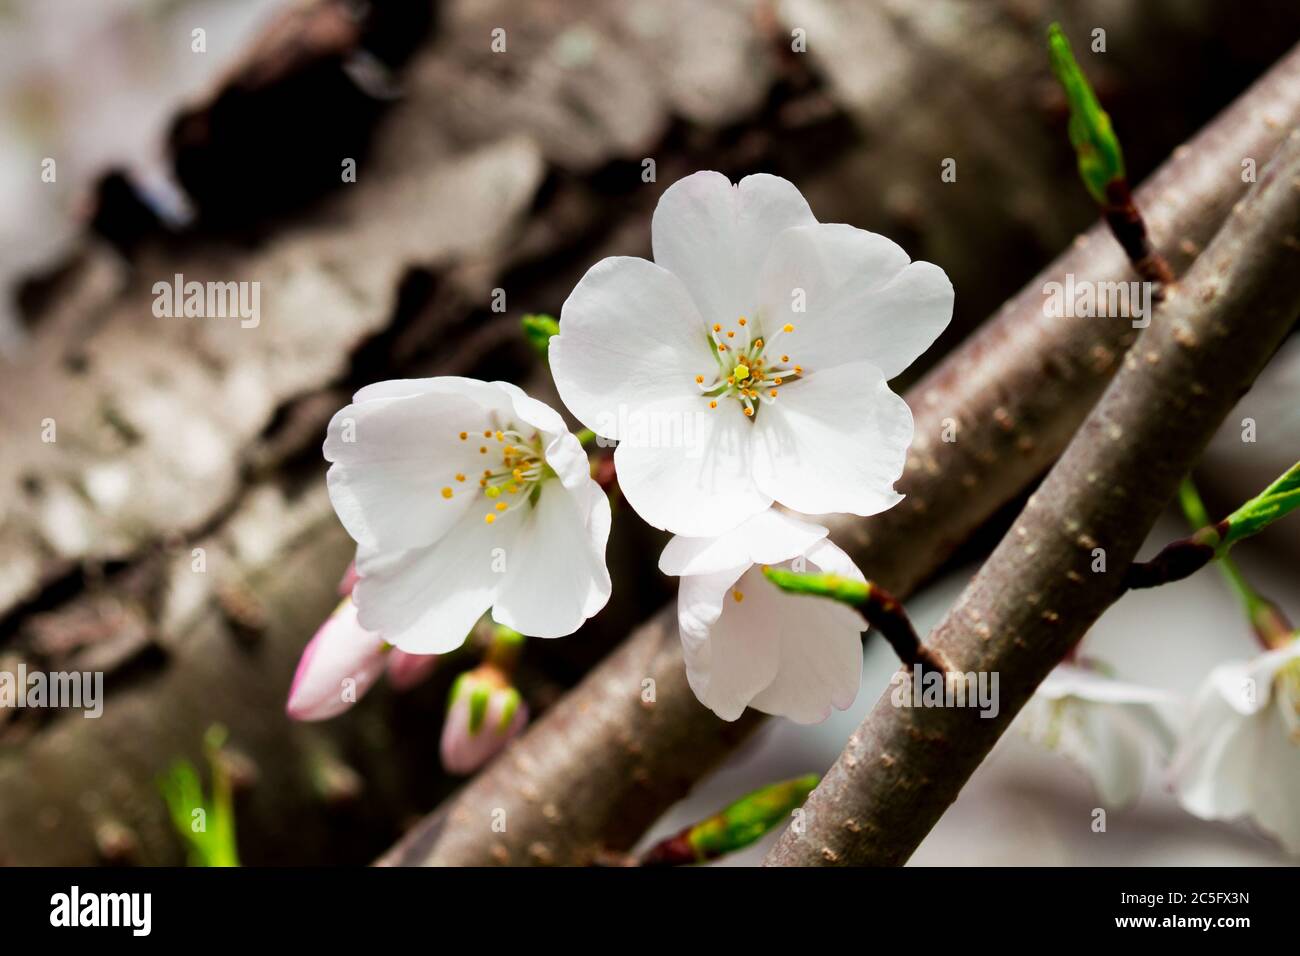 White cherry blossoms / sakura / Prunus serrulata on branch with tree bark in background, Alexandria, Virginia, United States Stock Photo